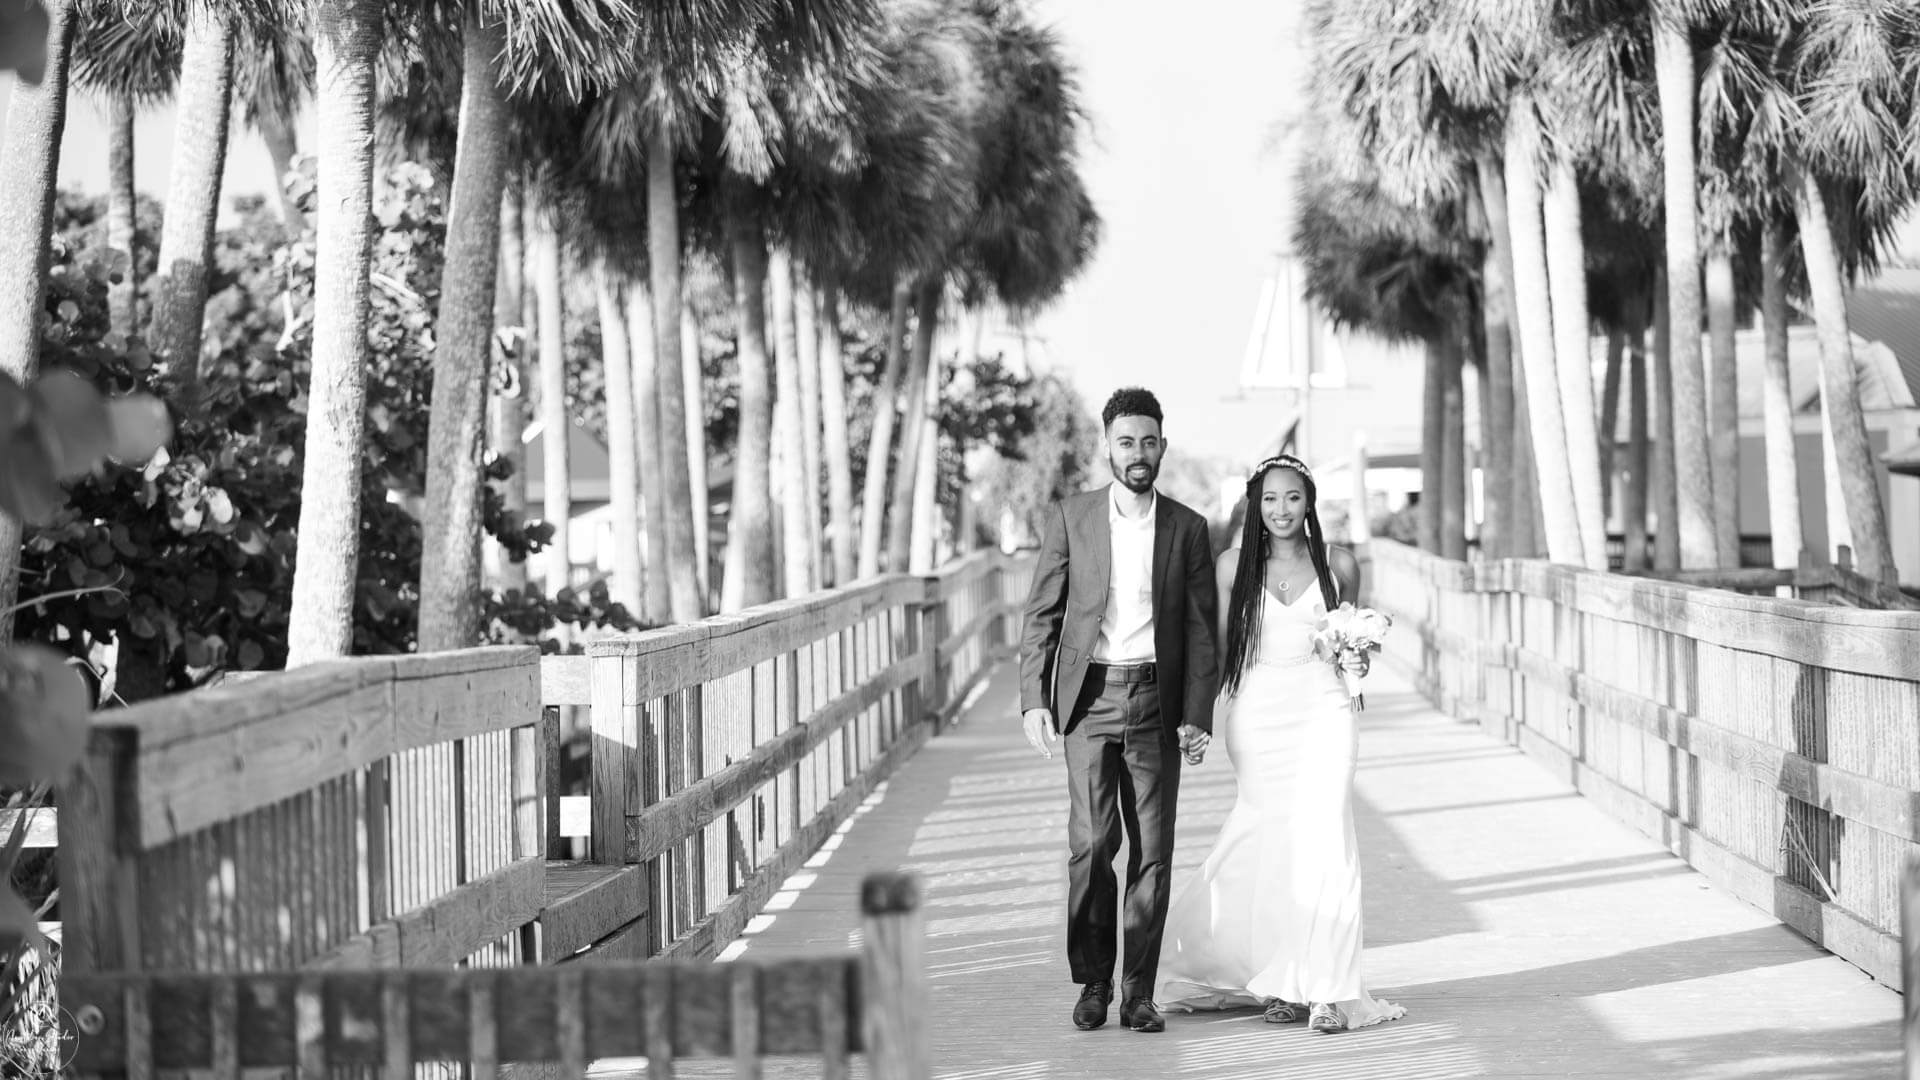 Lifestyle wedding photo of couple walking on boardwalk with palm trees